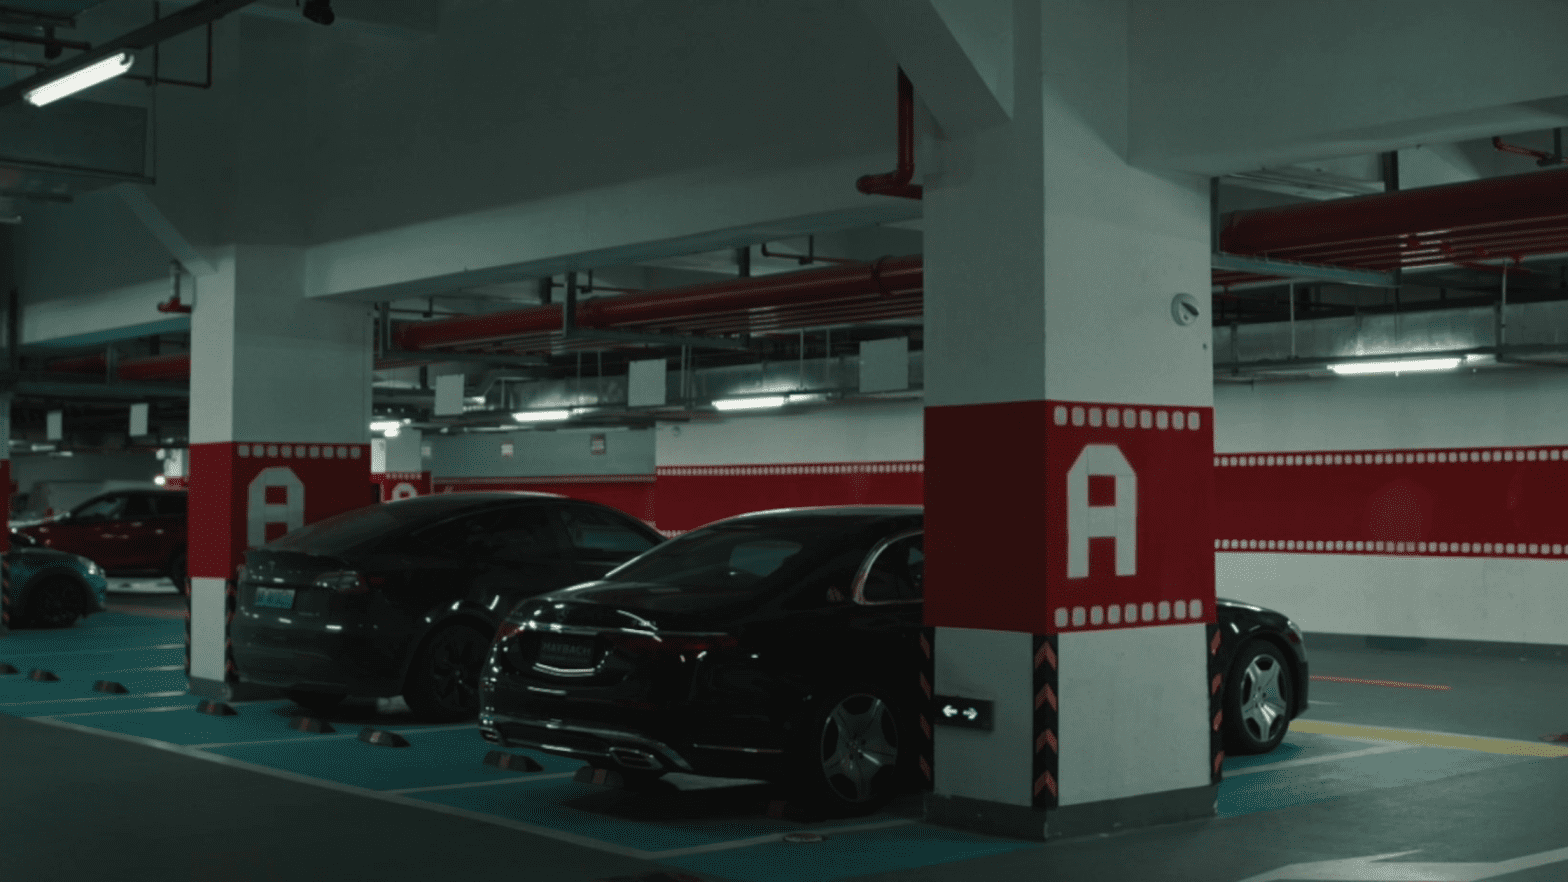 Smart Parking Lot Lighting